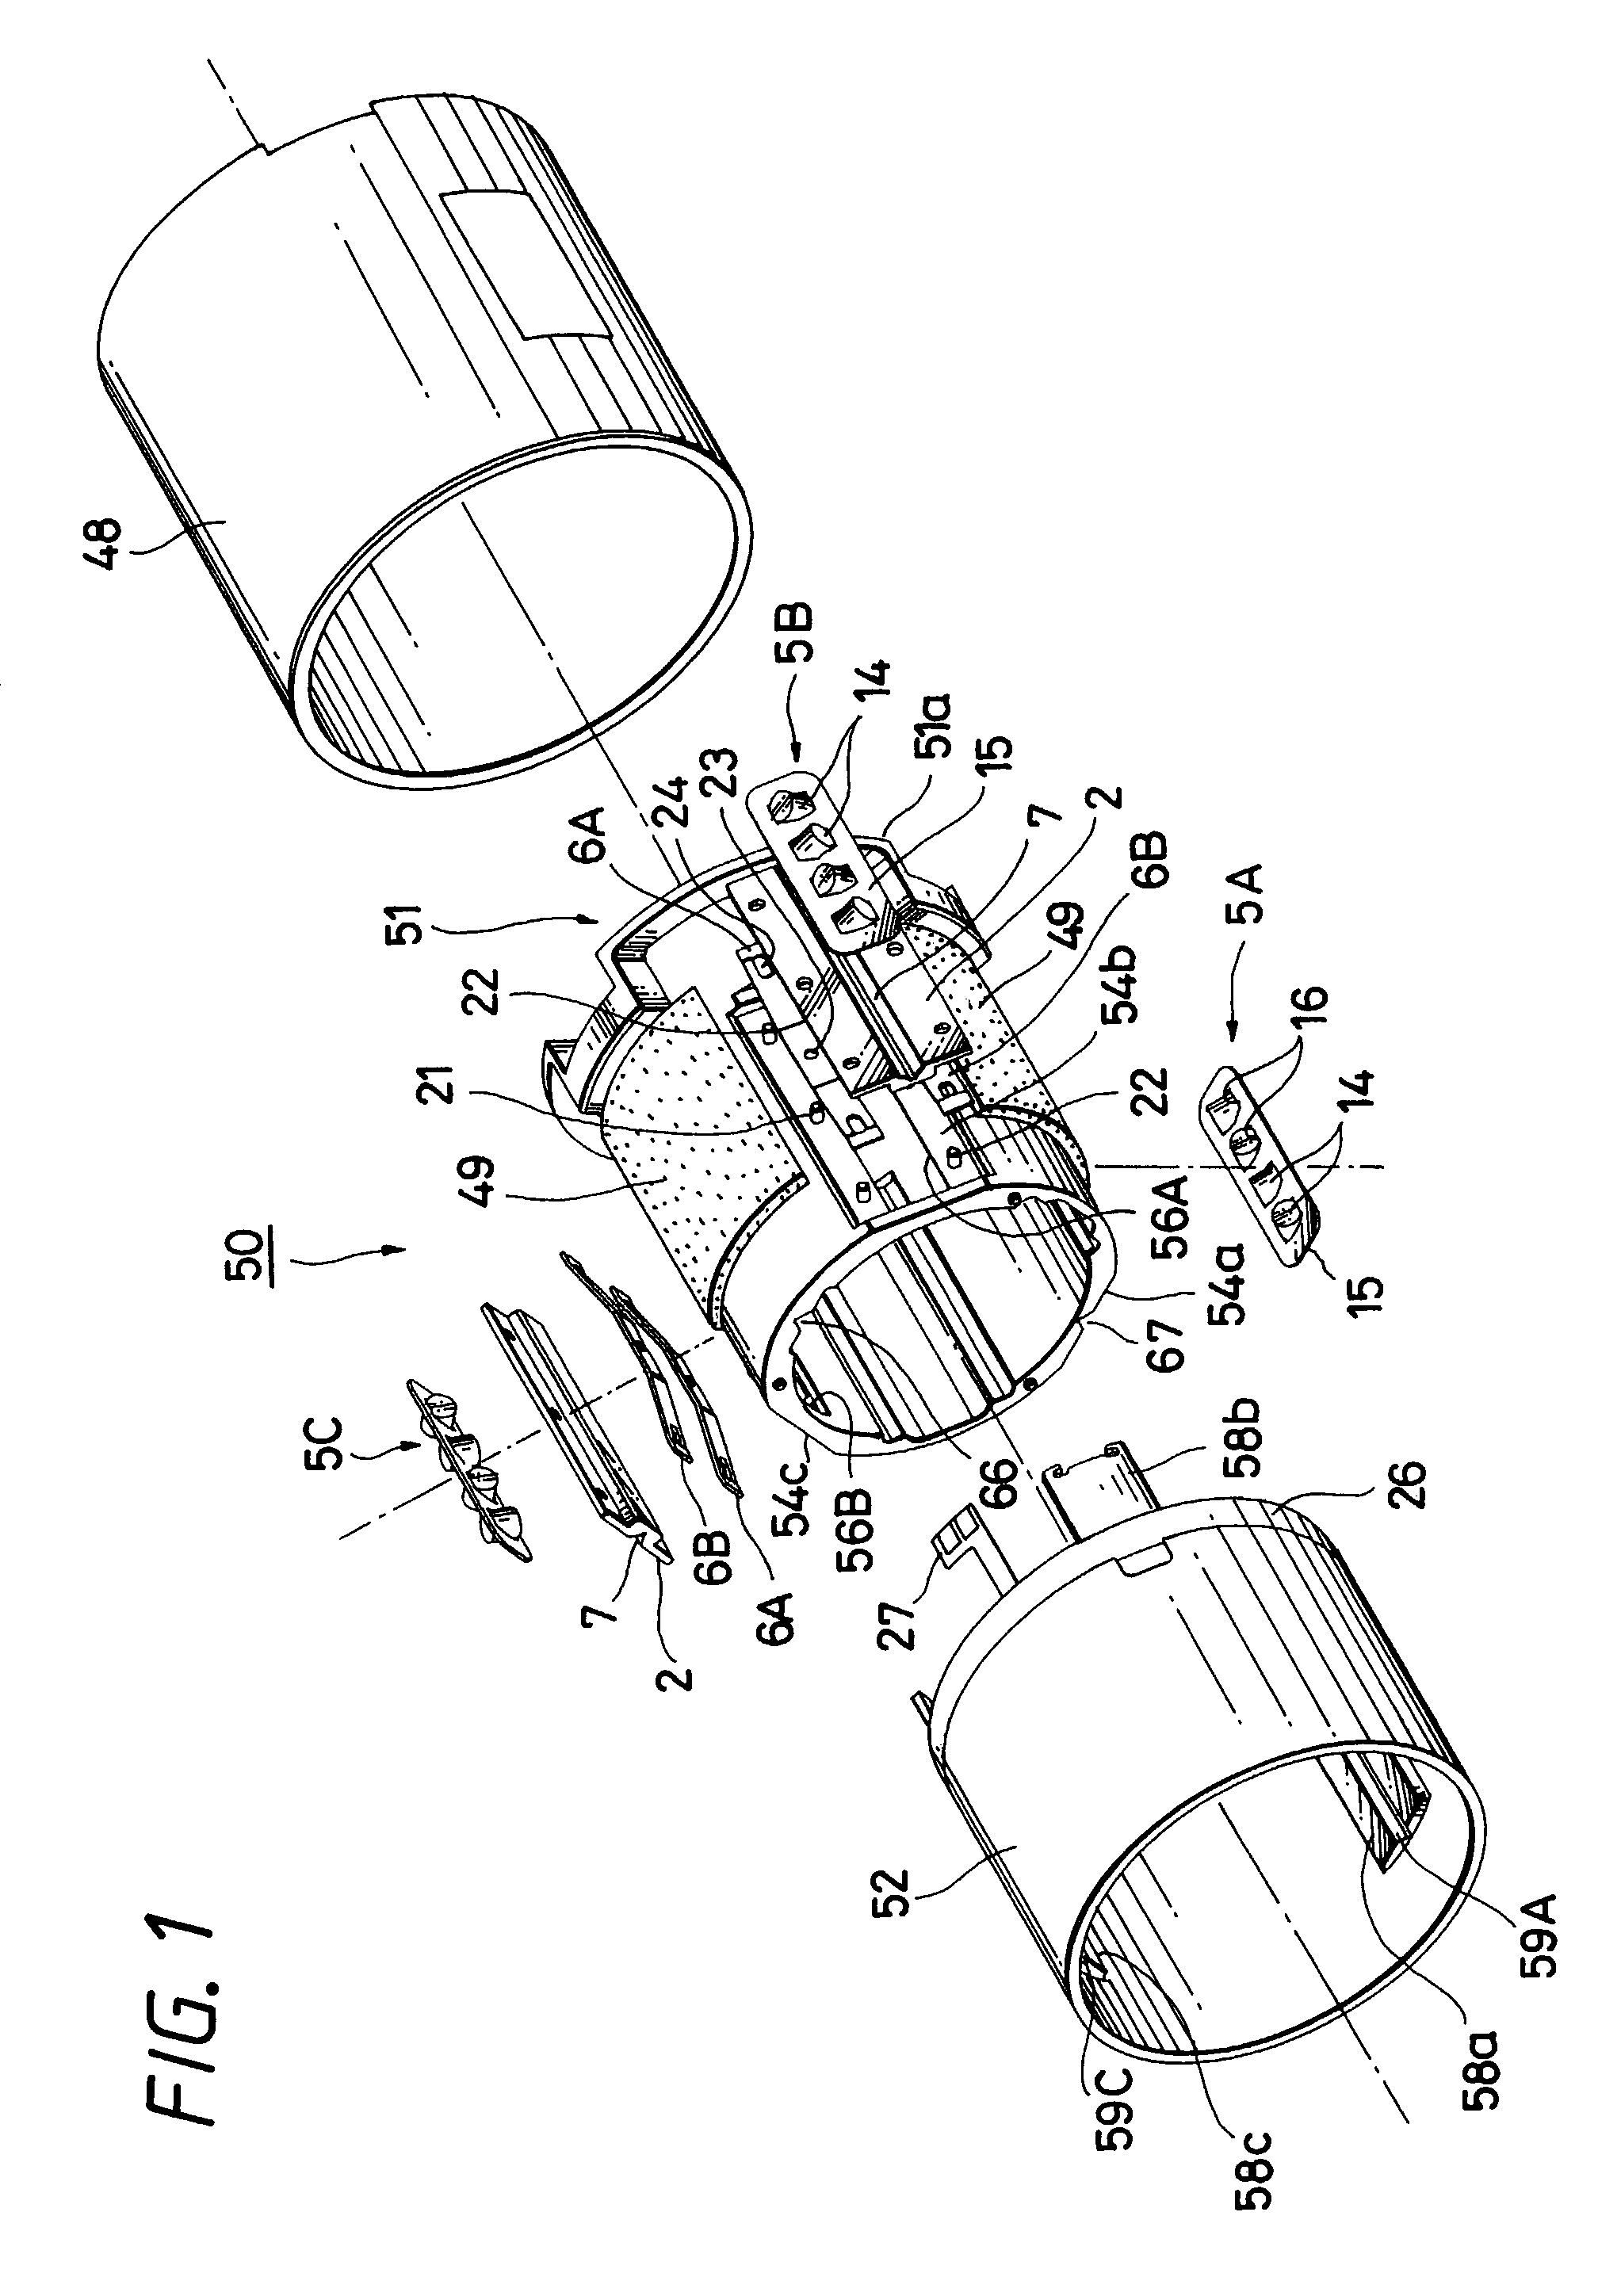 Lens apparatus and image pickup apparatus